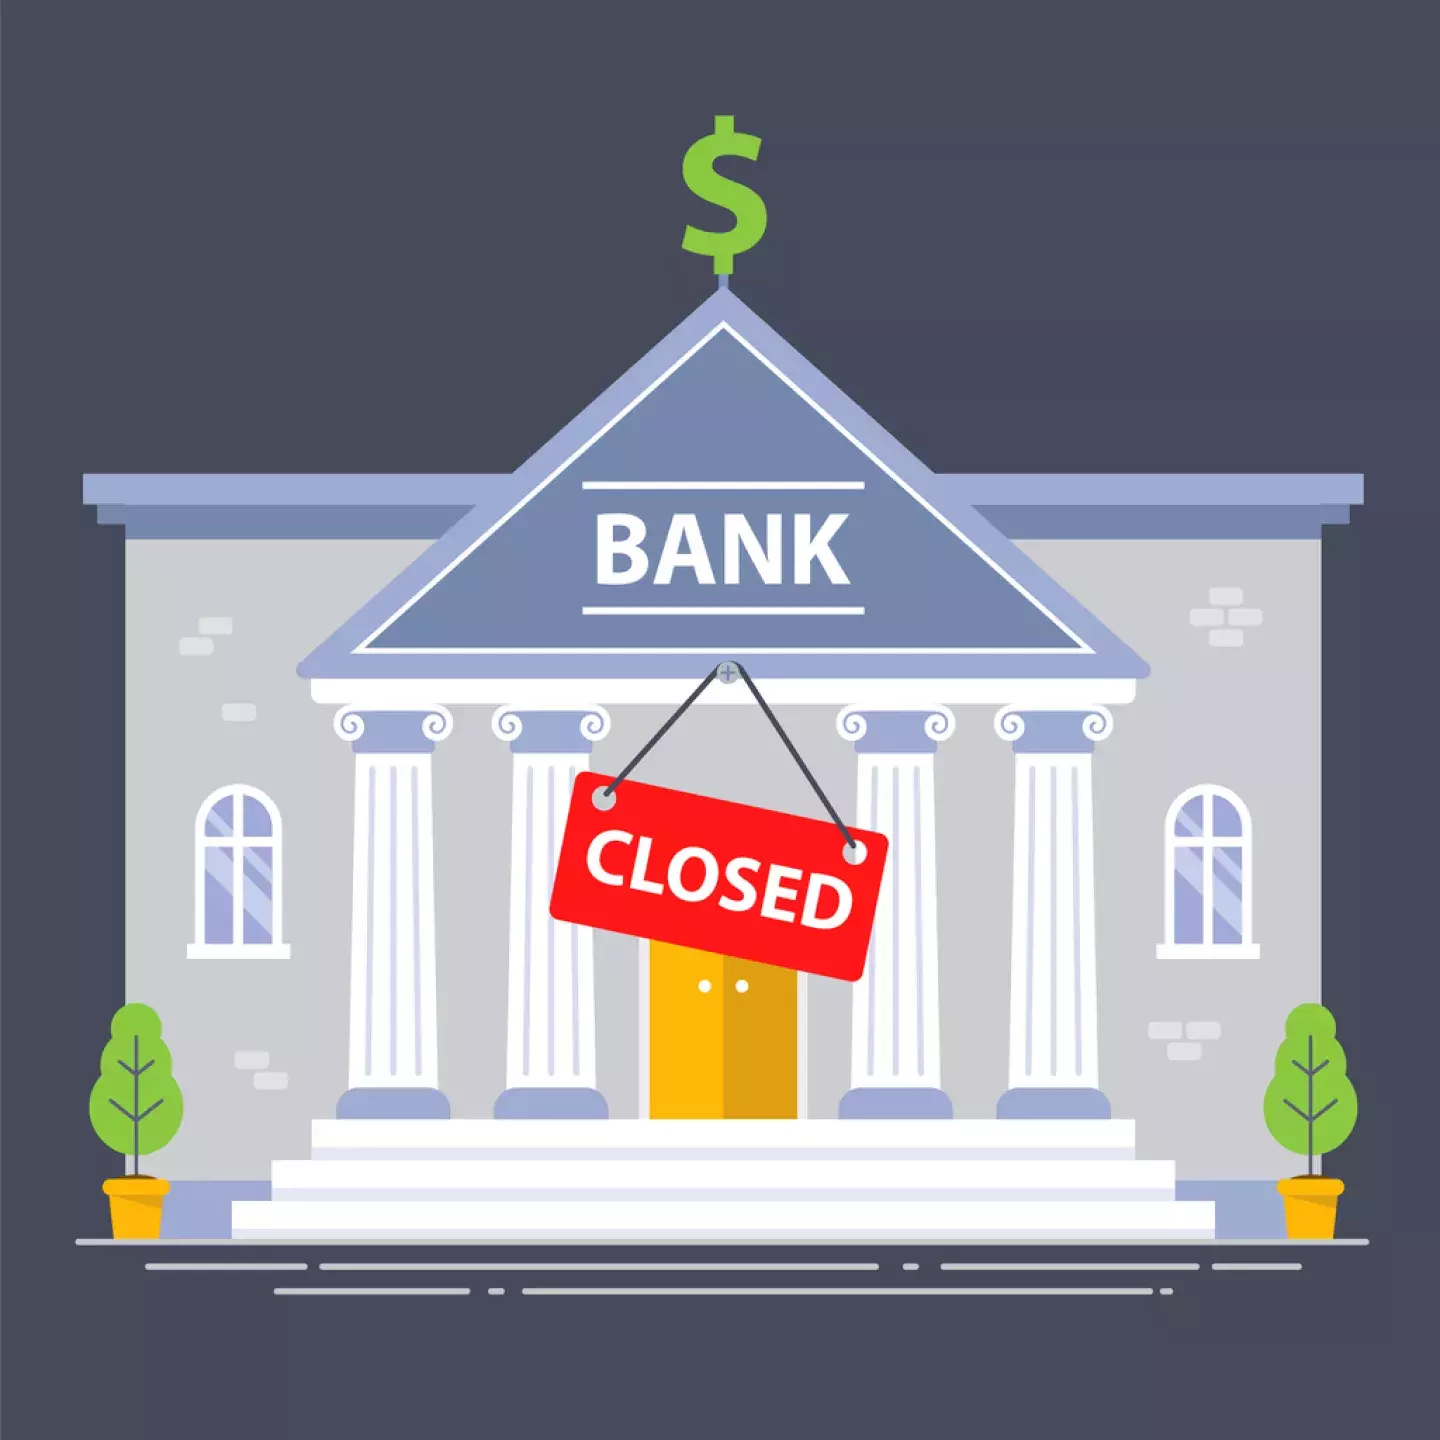 Illustration of bank branch closed